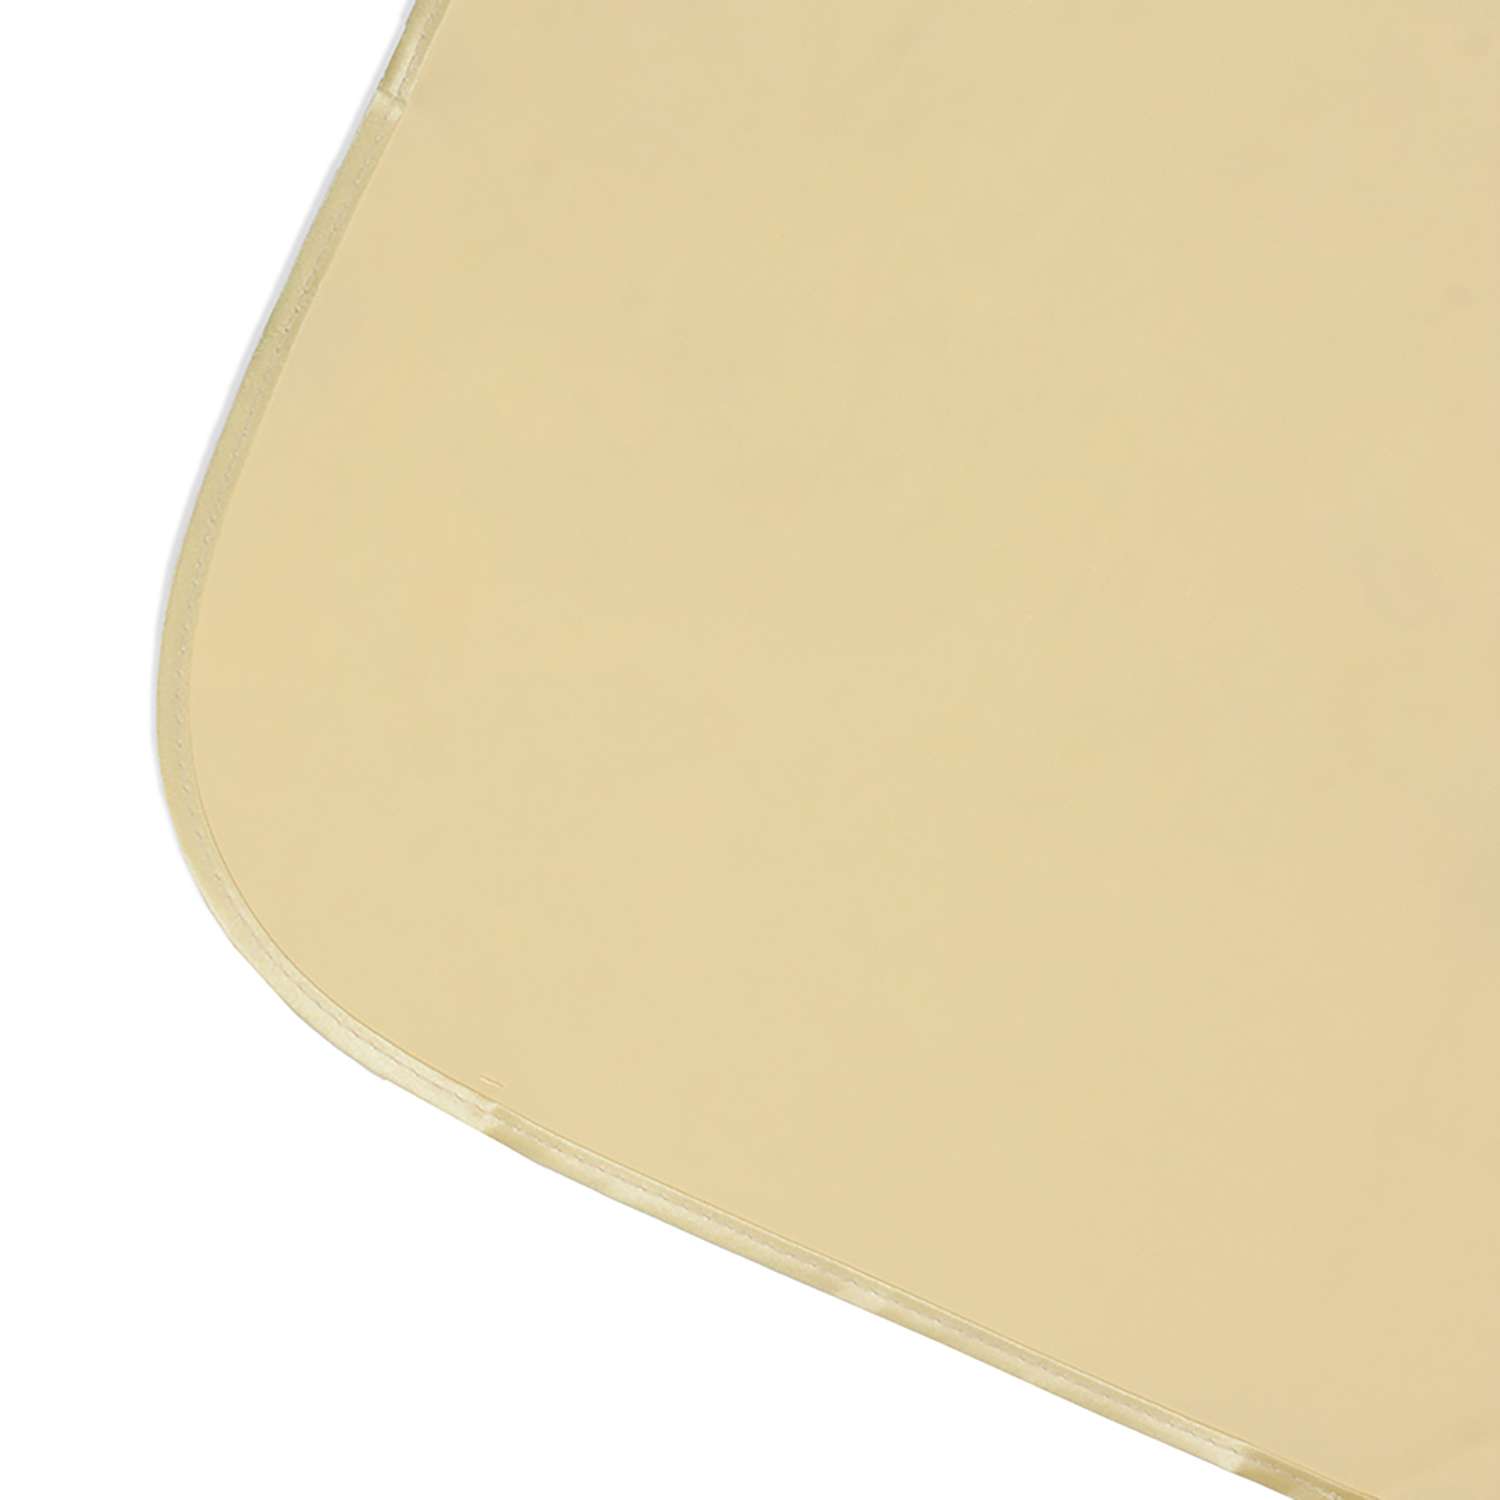 Наматрасник Чудо-чадо клеенка на резинках 50х70 желтый - фото 6